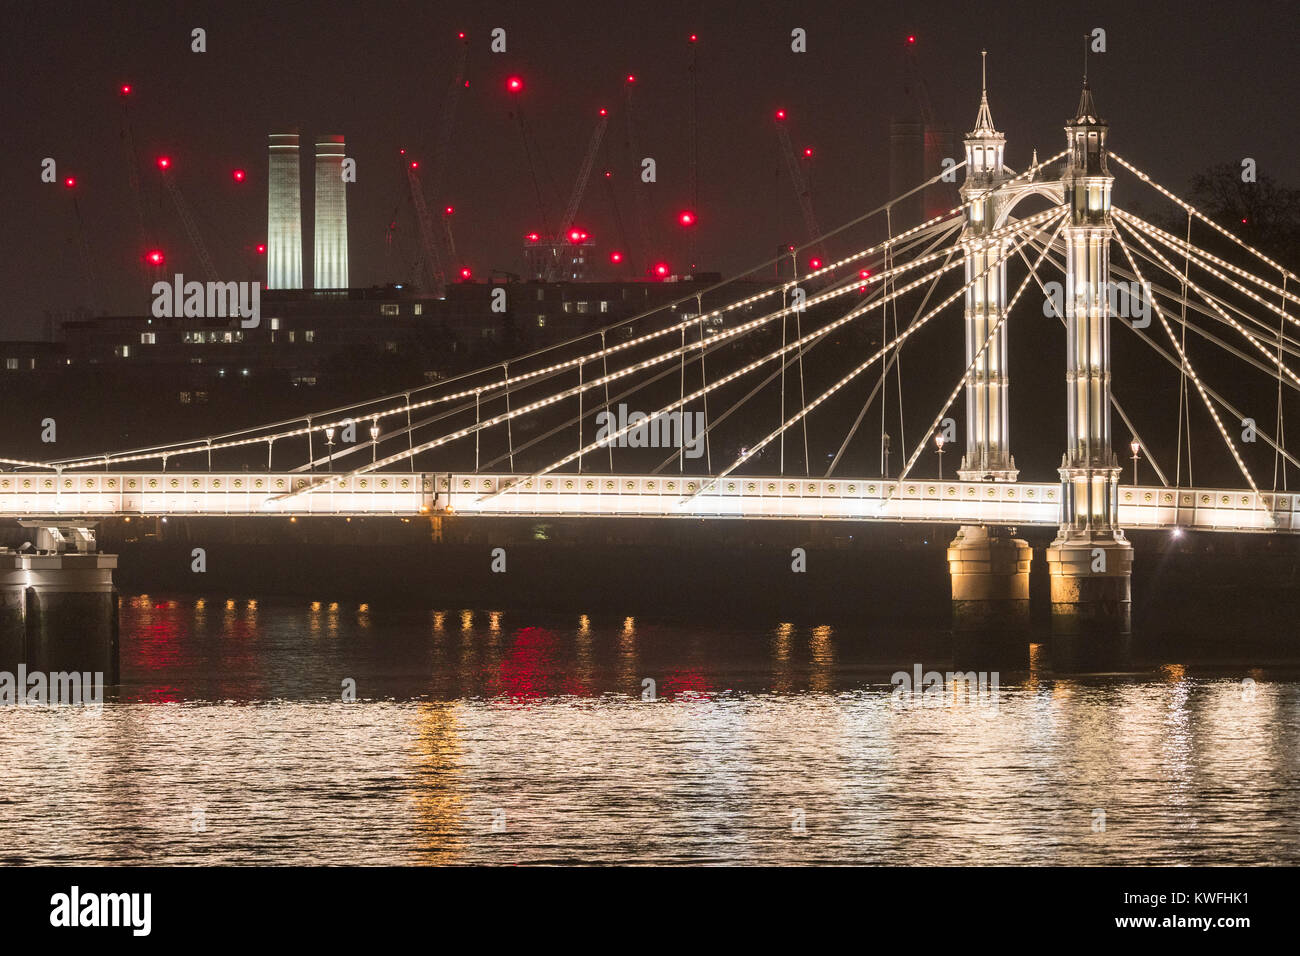 Una vista notturna di Albert Bridge di Londra. Foto Data: Martedì, 2 gennaio 2018. Foto: Roger Garfield/Alamy Live News Foto Stock